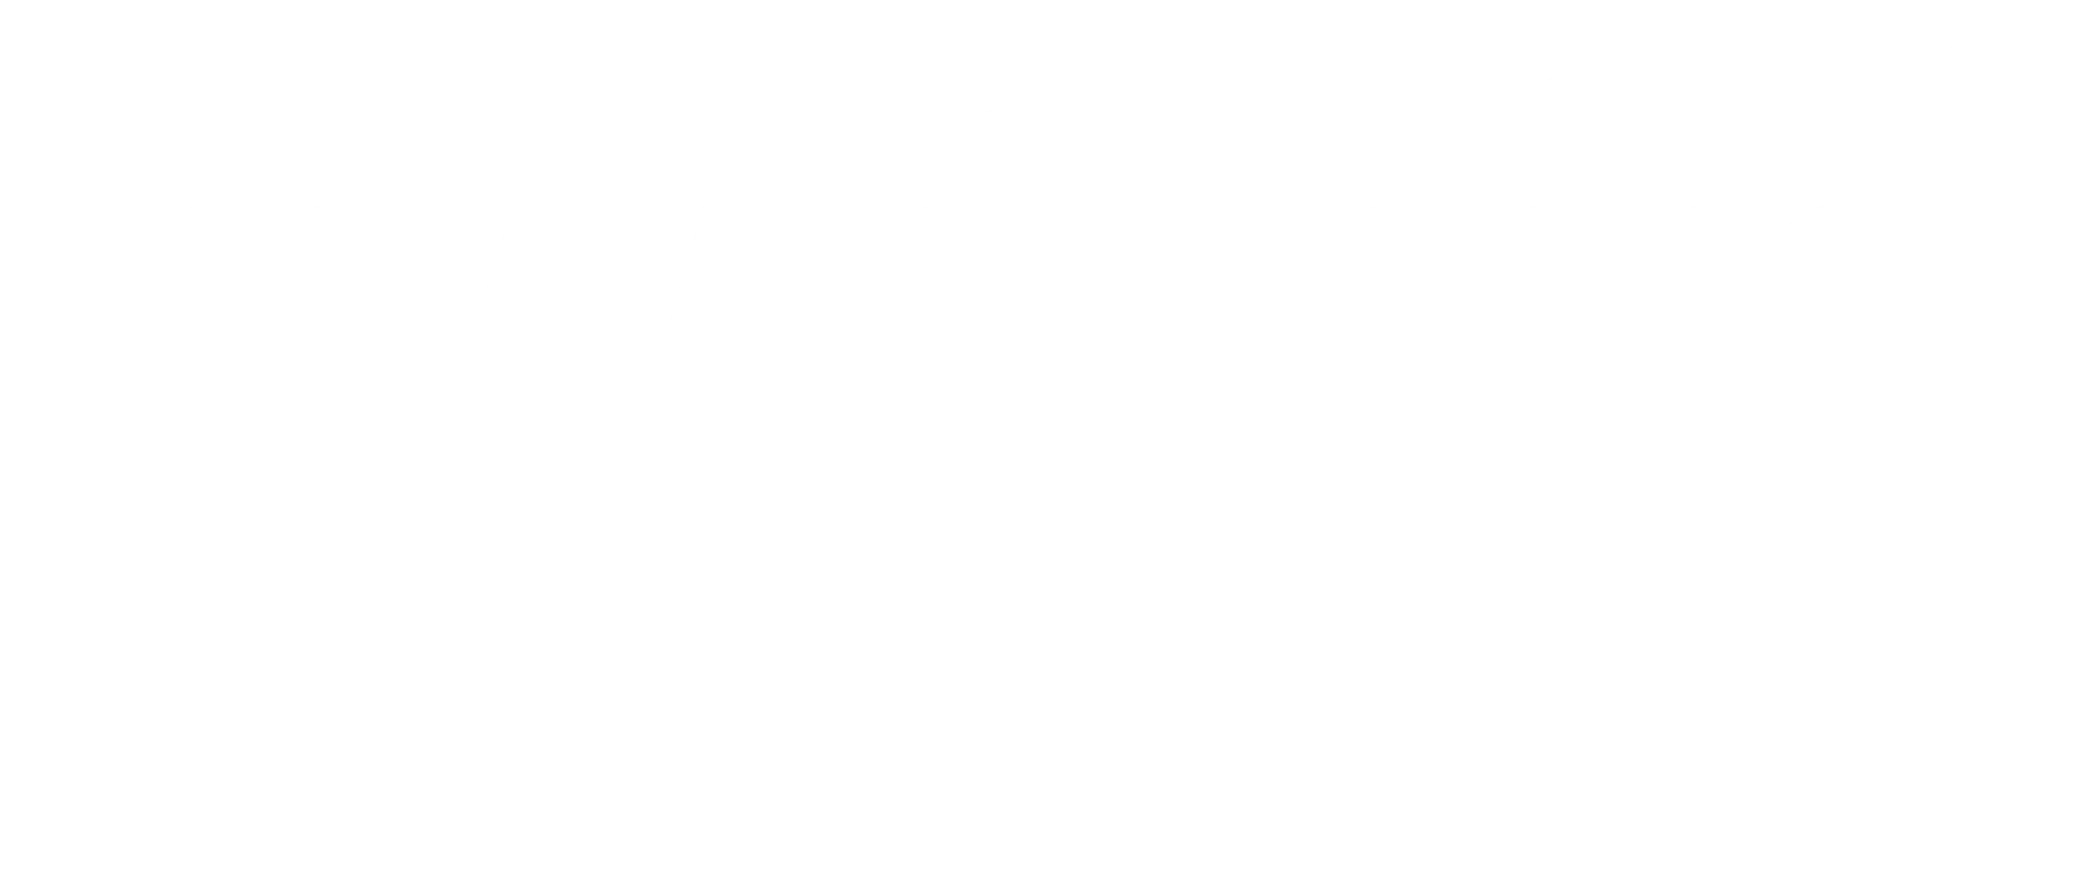 Format uwtuin logo wit_hoveniers